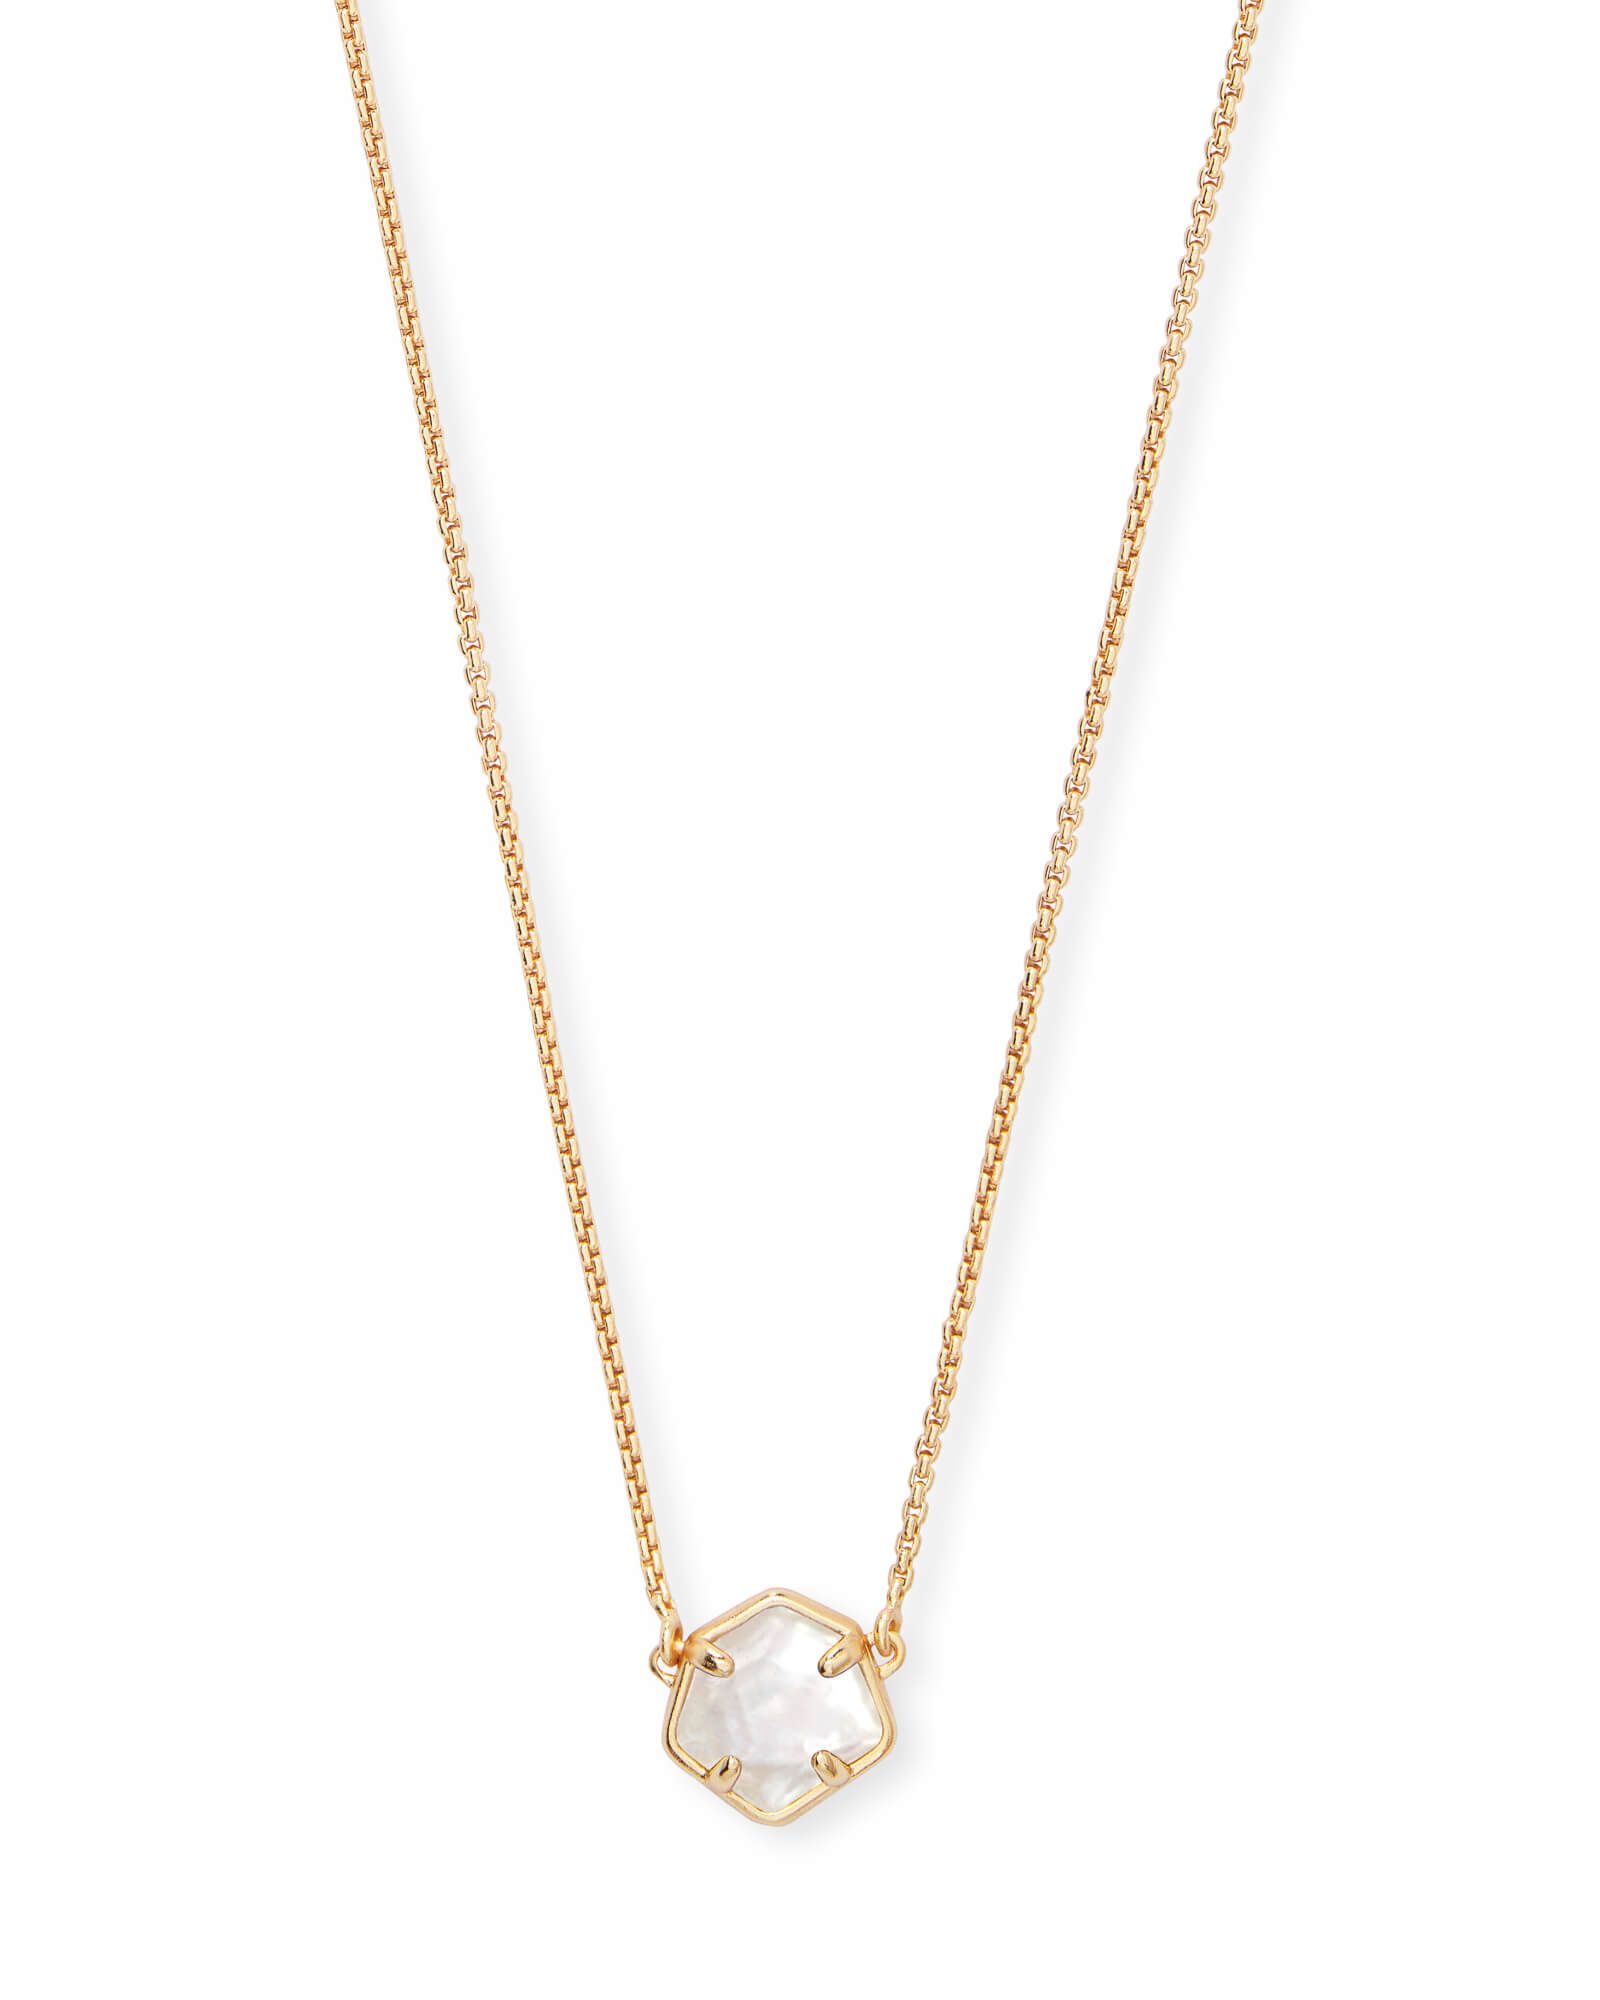 Jaxon Gold Pendant Necklace in Ivory Mother-of-Pearl | Kendra Scott | Kendra Scott